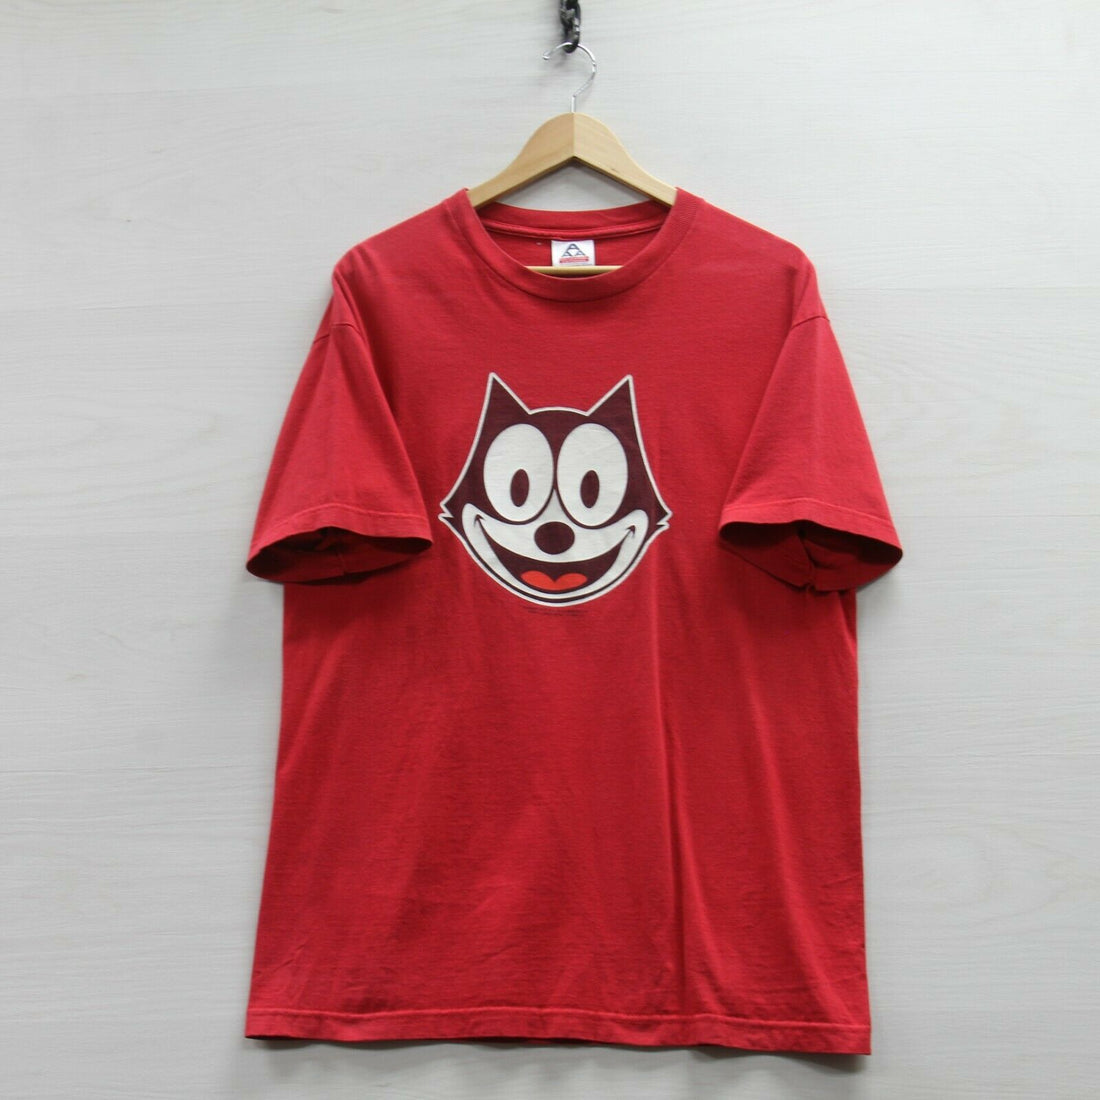 Vintage Felix the Cat T-Shirt Size Large Red